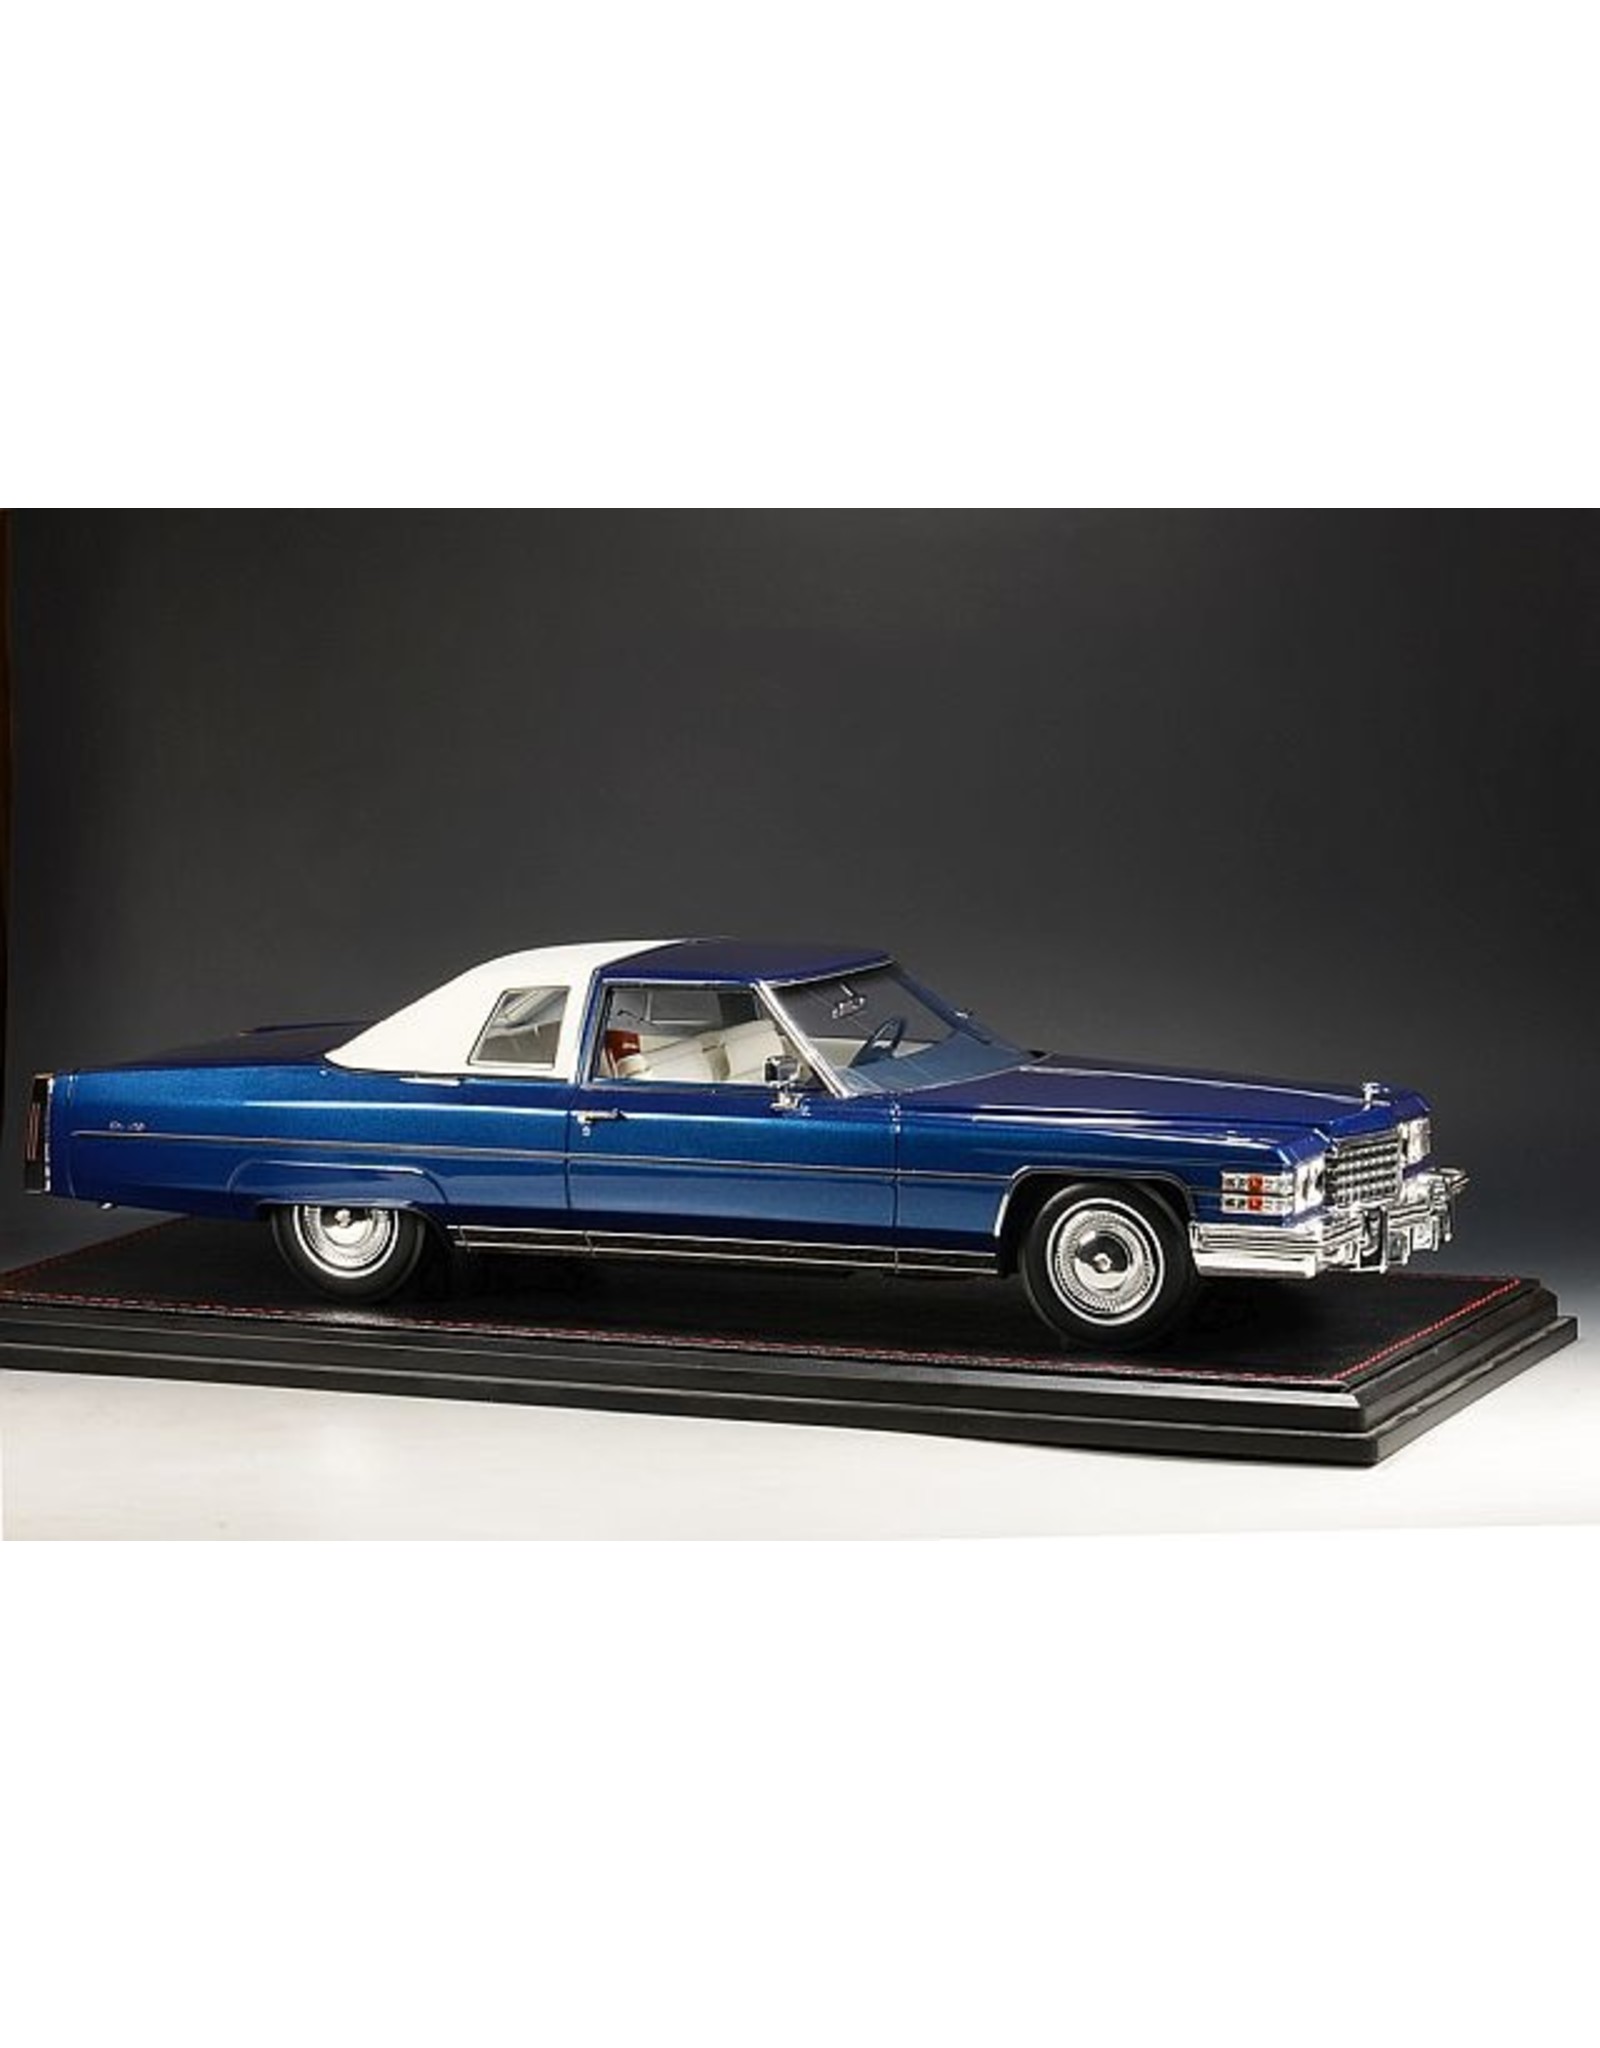 Cadillac(General Motors) Cadillac coupe Deville(1974)Regal blue Firemist